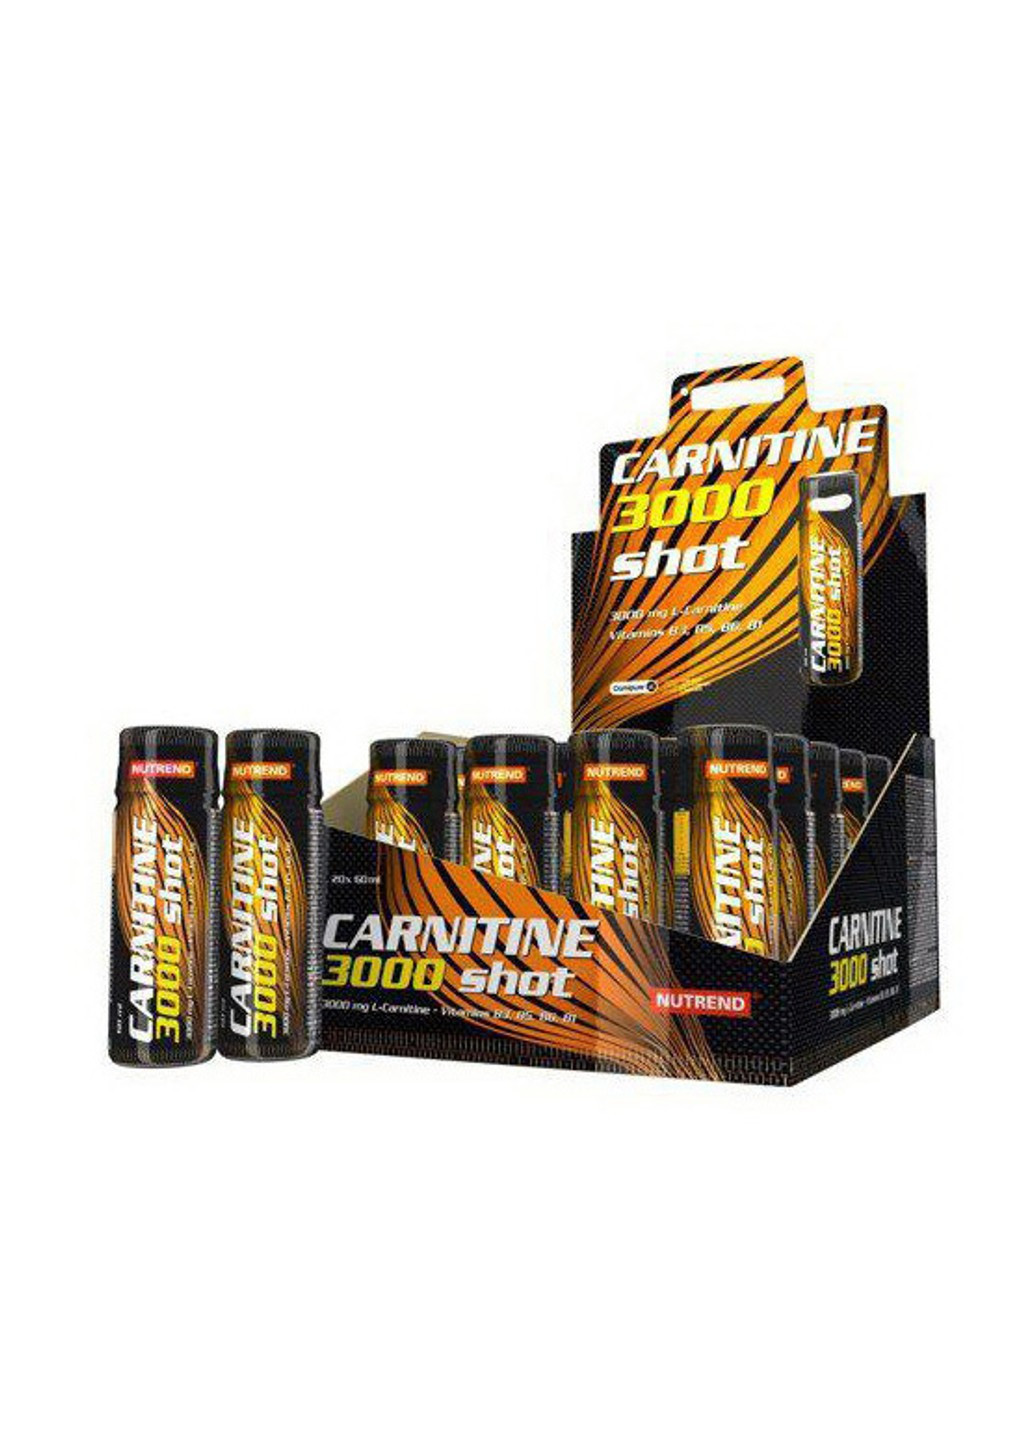 Л-карнітин Carnitine 3000 Shot 20 х 60 мл Апельсин Nutrend (255362565)